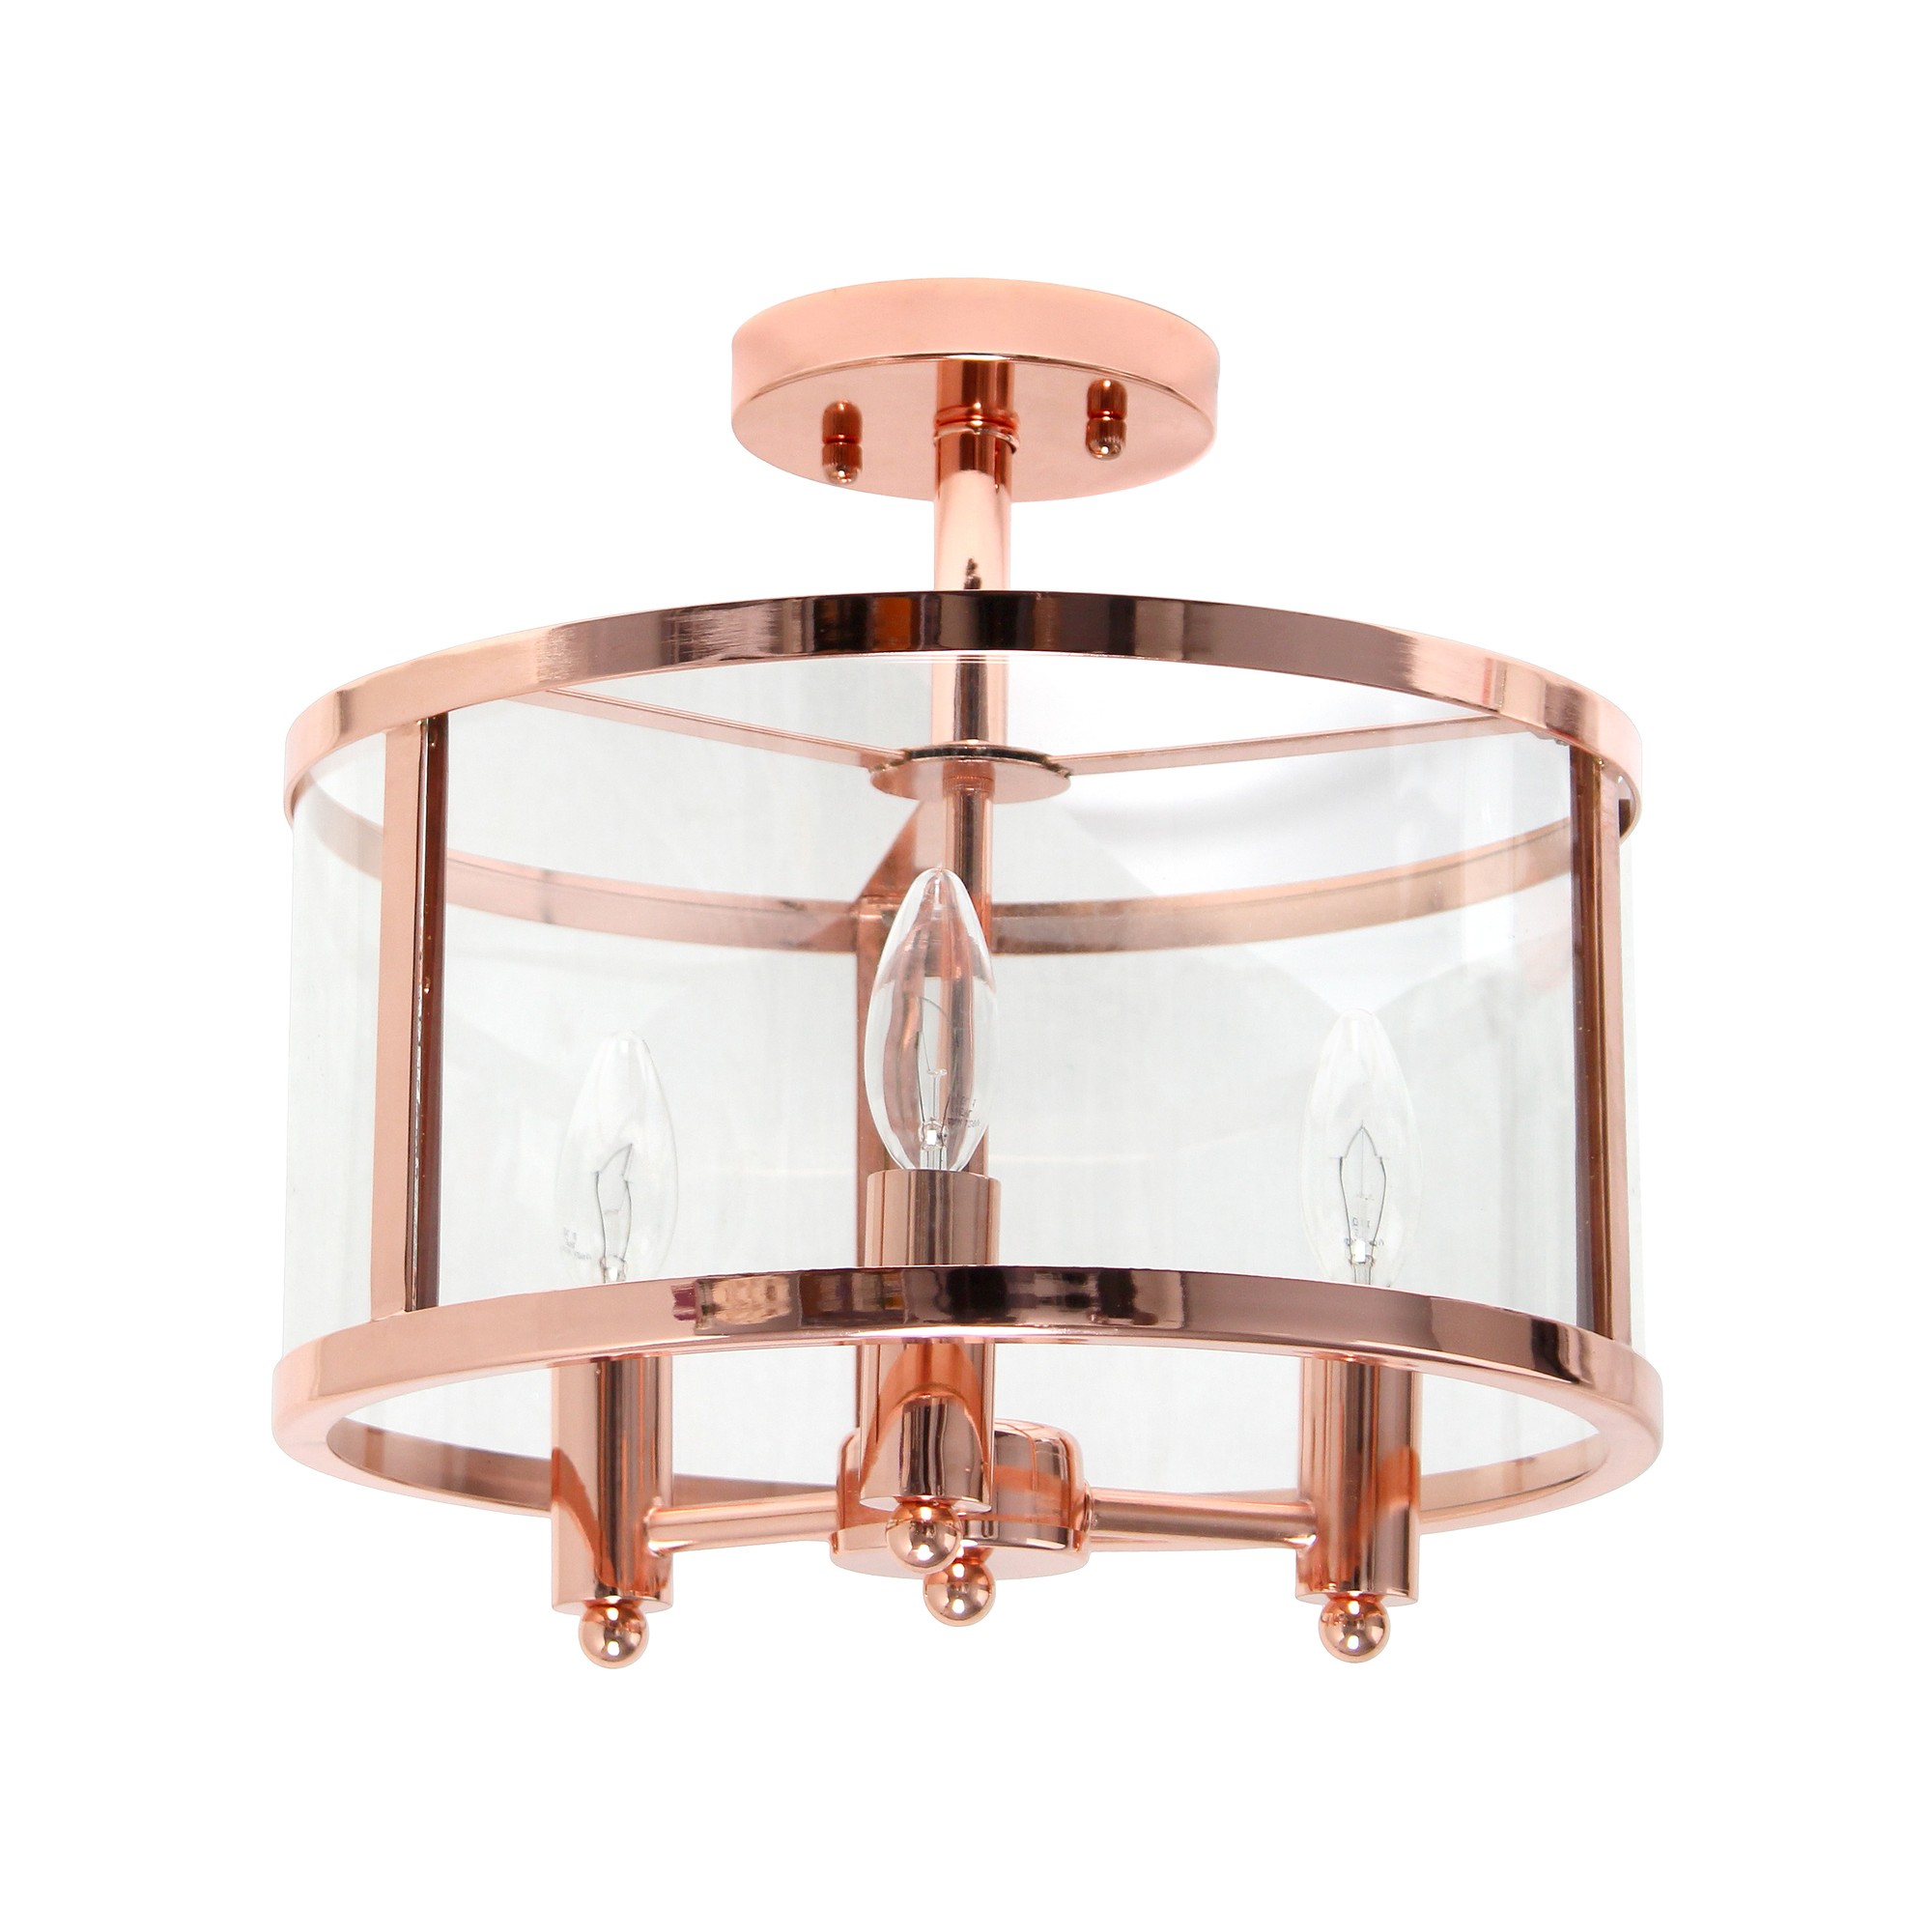 Lalia Home 3-Light 13" Industrial Farmhouse Glass and Metallic Accented Semi-flushmount, Rose Gold